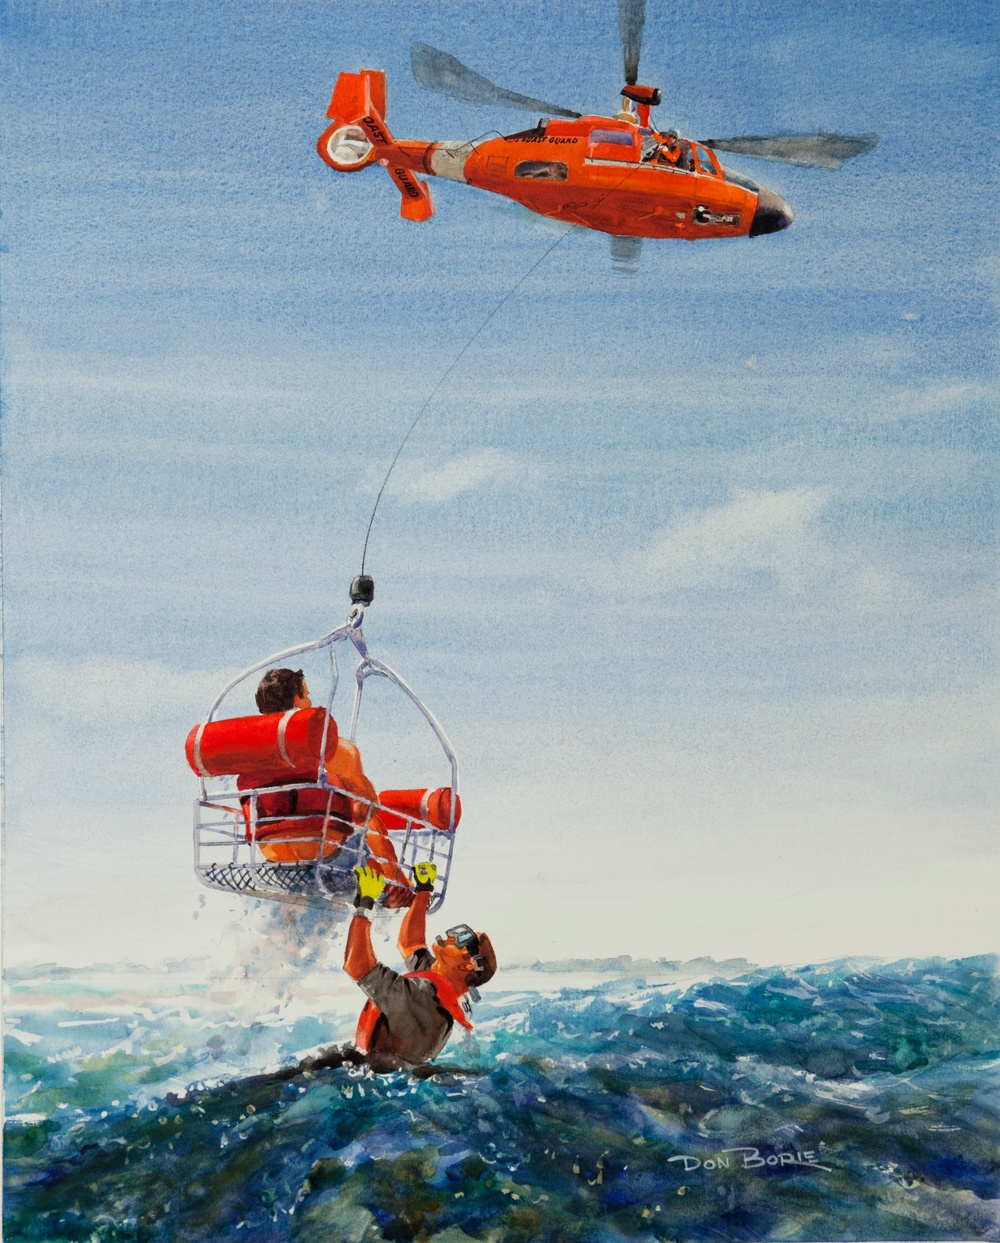 US Coast Guard Art Program 2015 Collection, 'Lifeline'